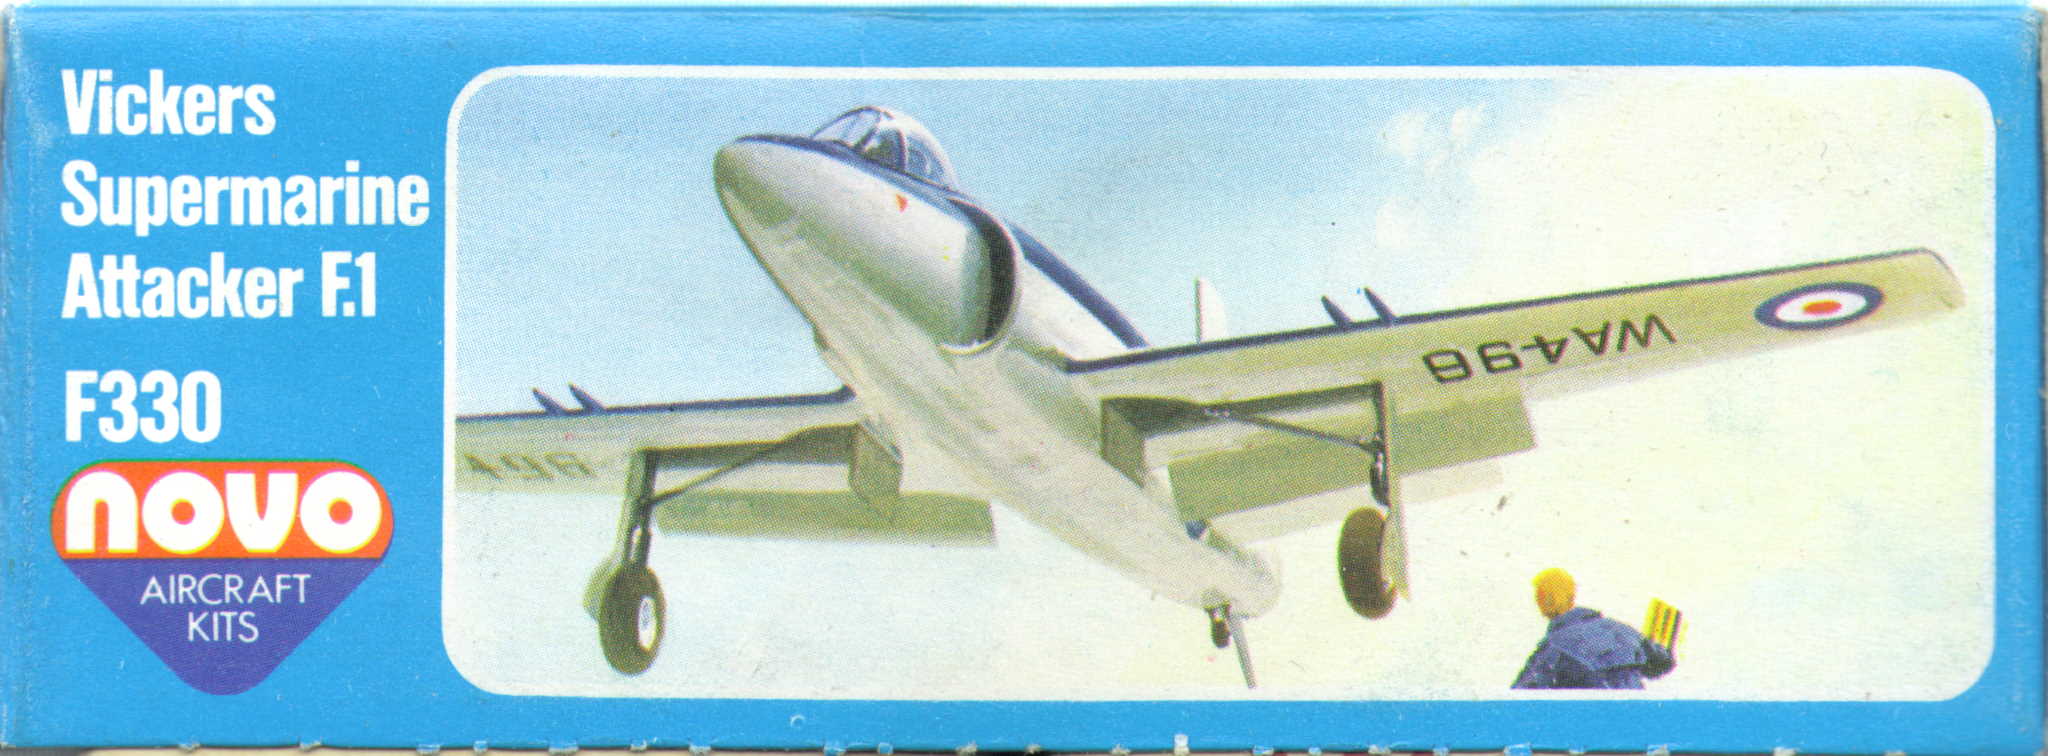 Малая сторона коробки NOVO Toys Ltd F330 Supermarine Attacker, 1979